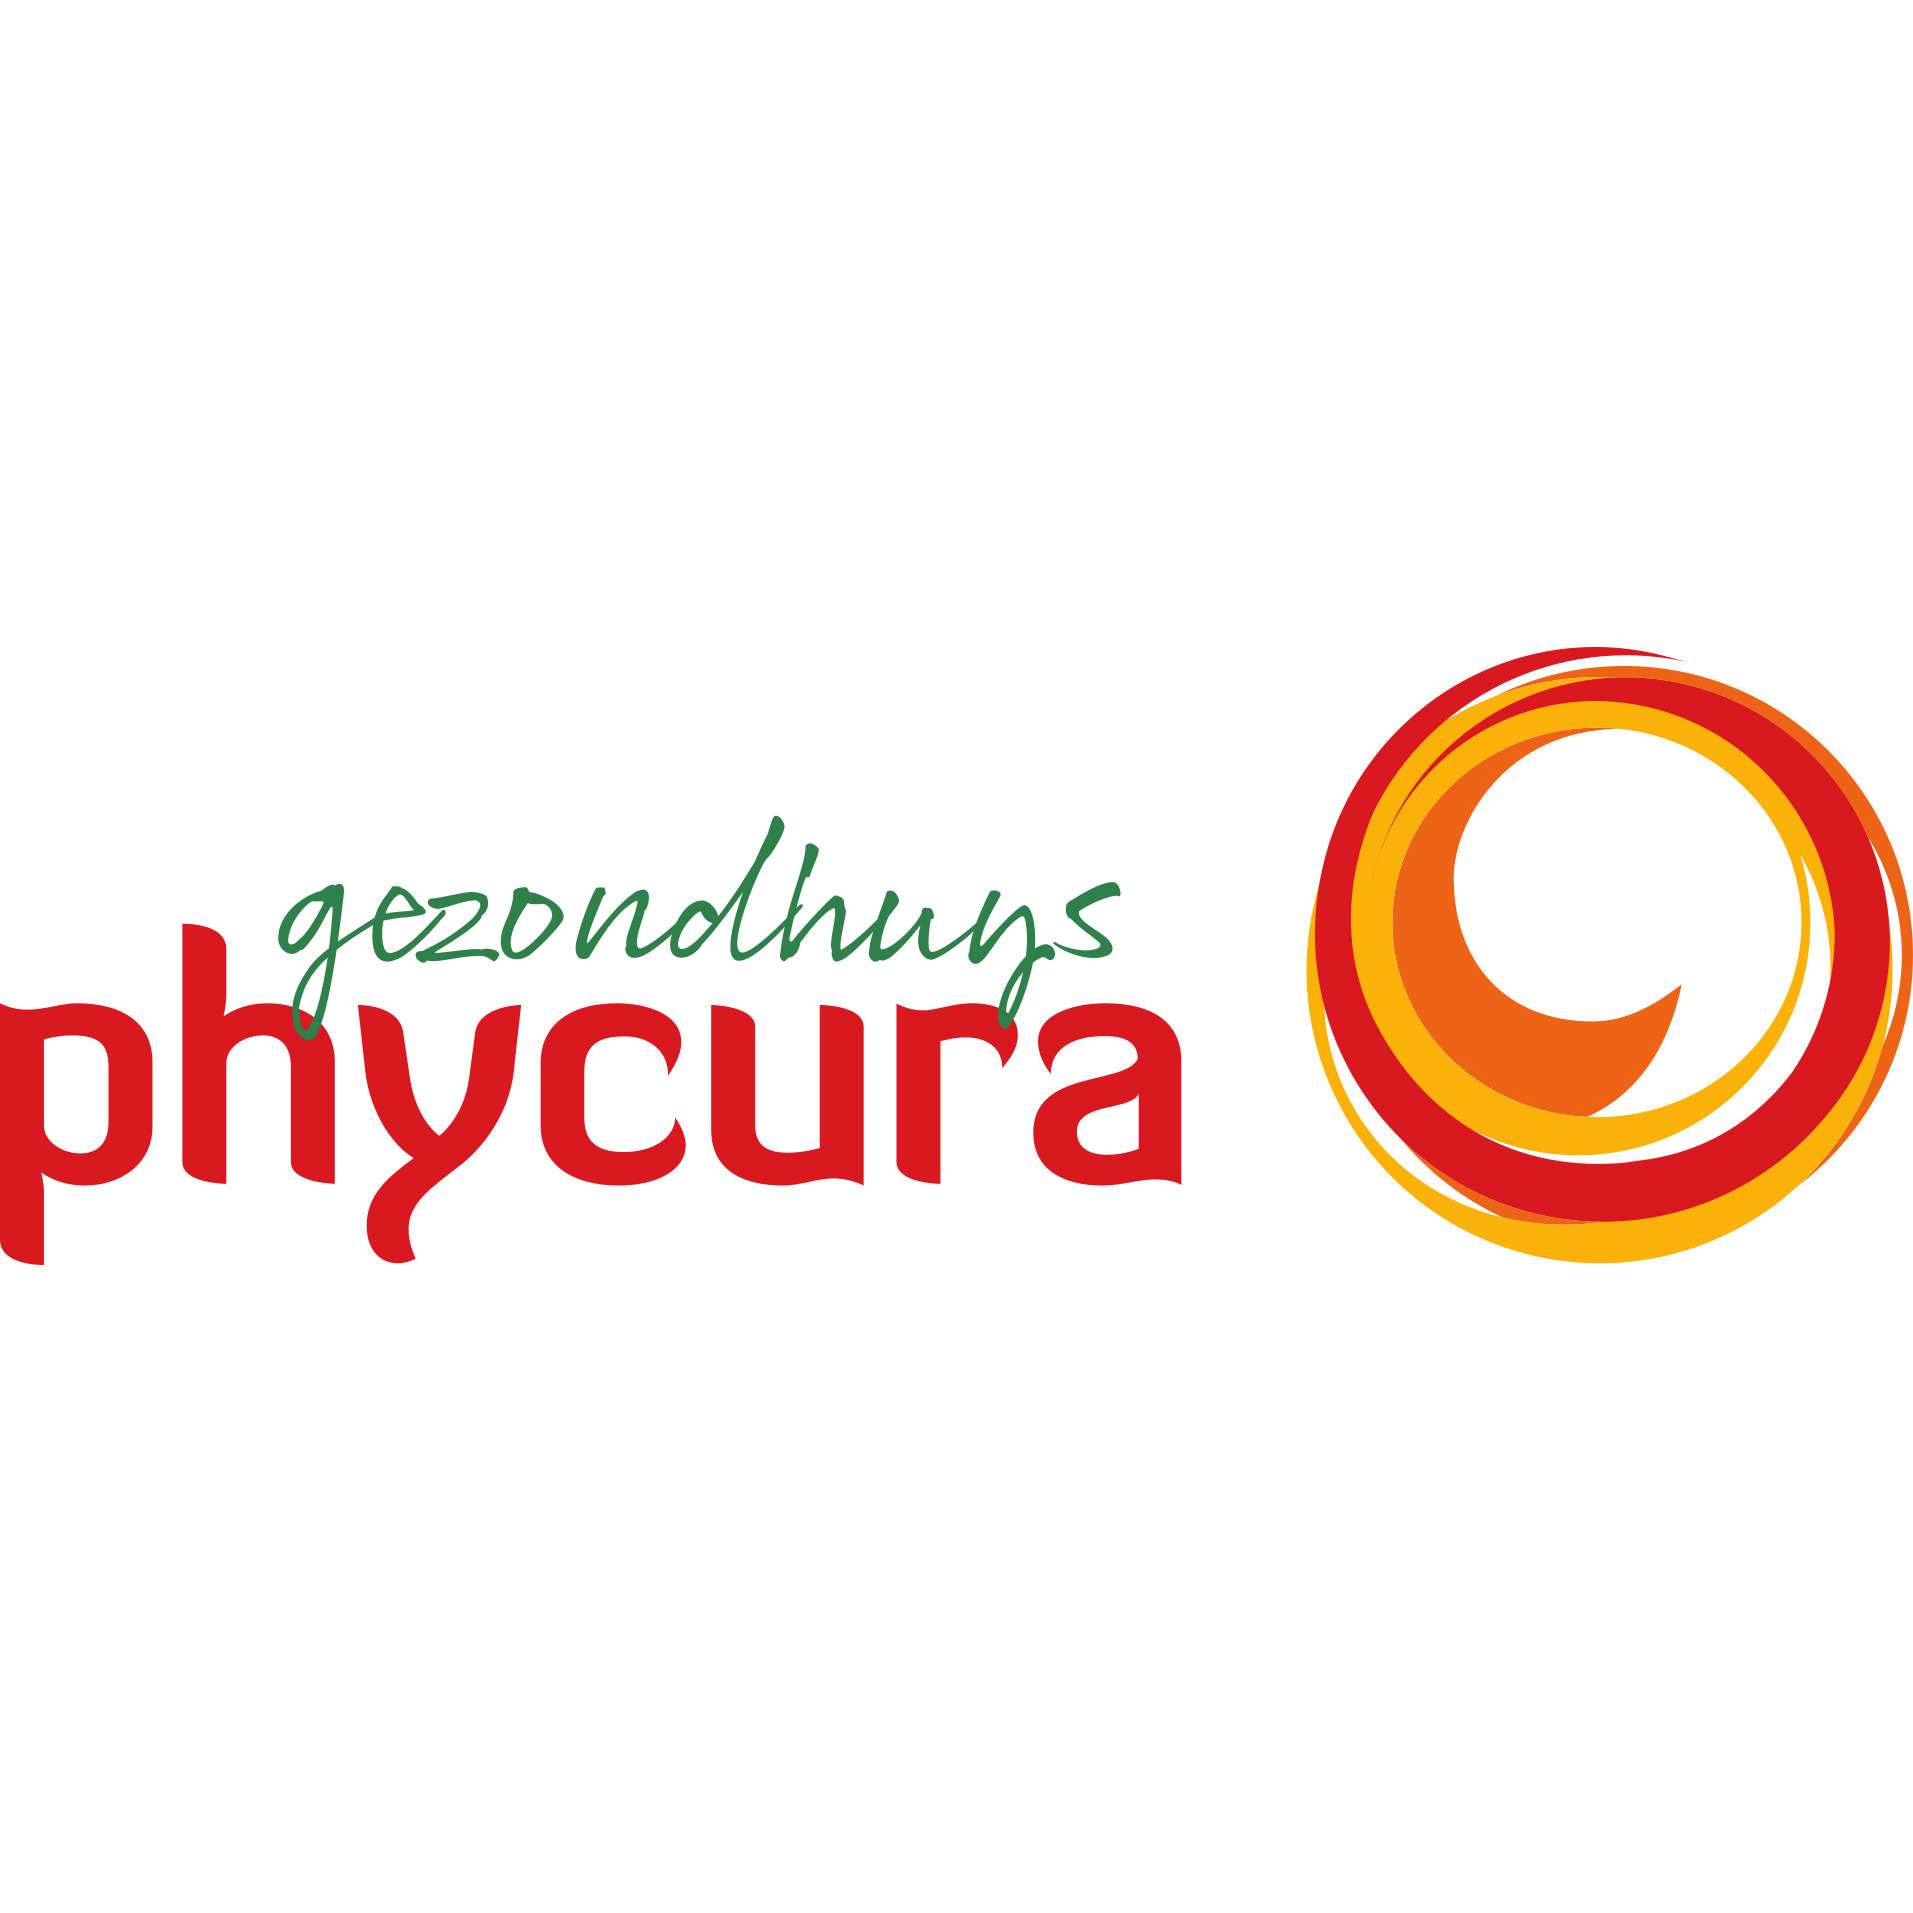 Gezondhuys Phycura